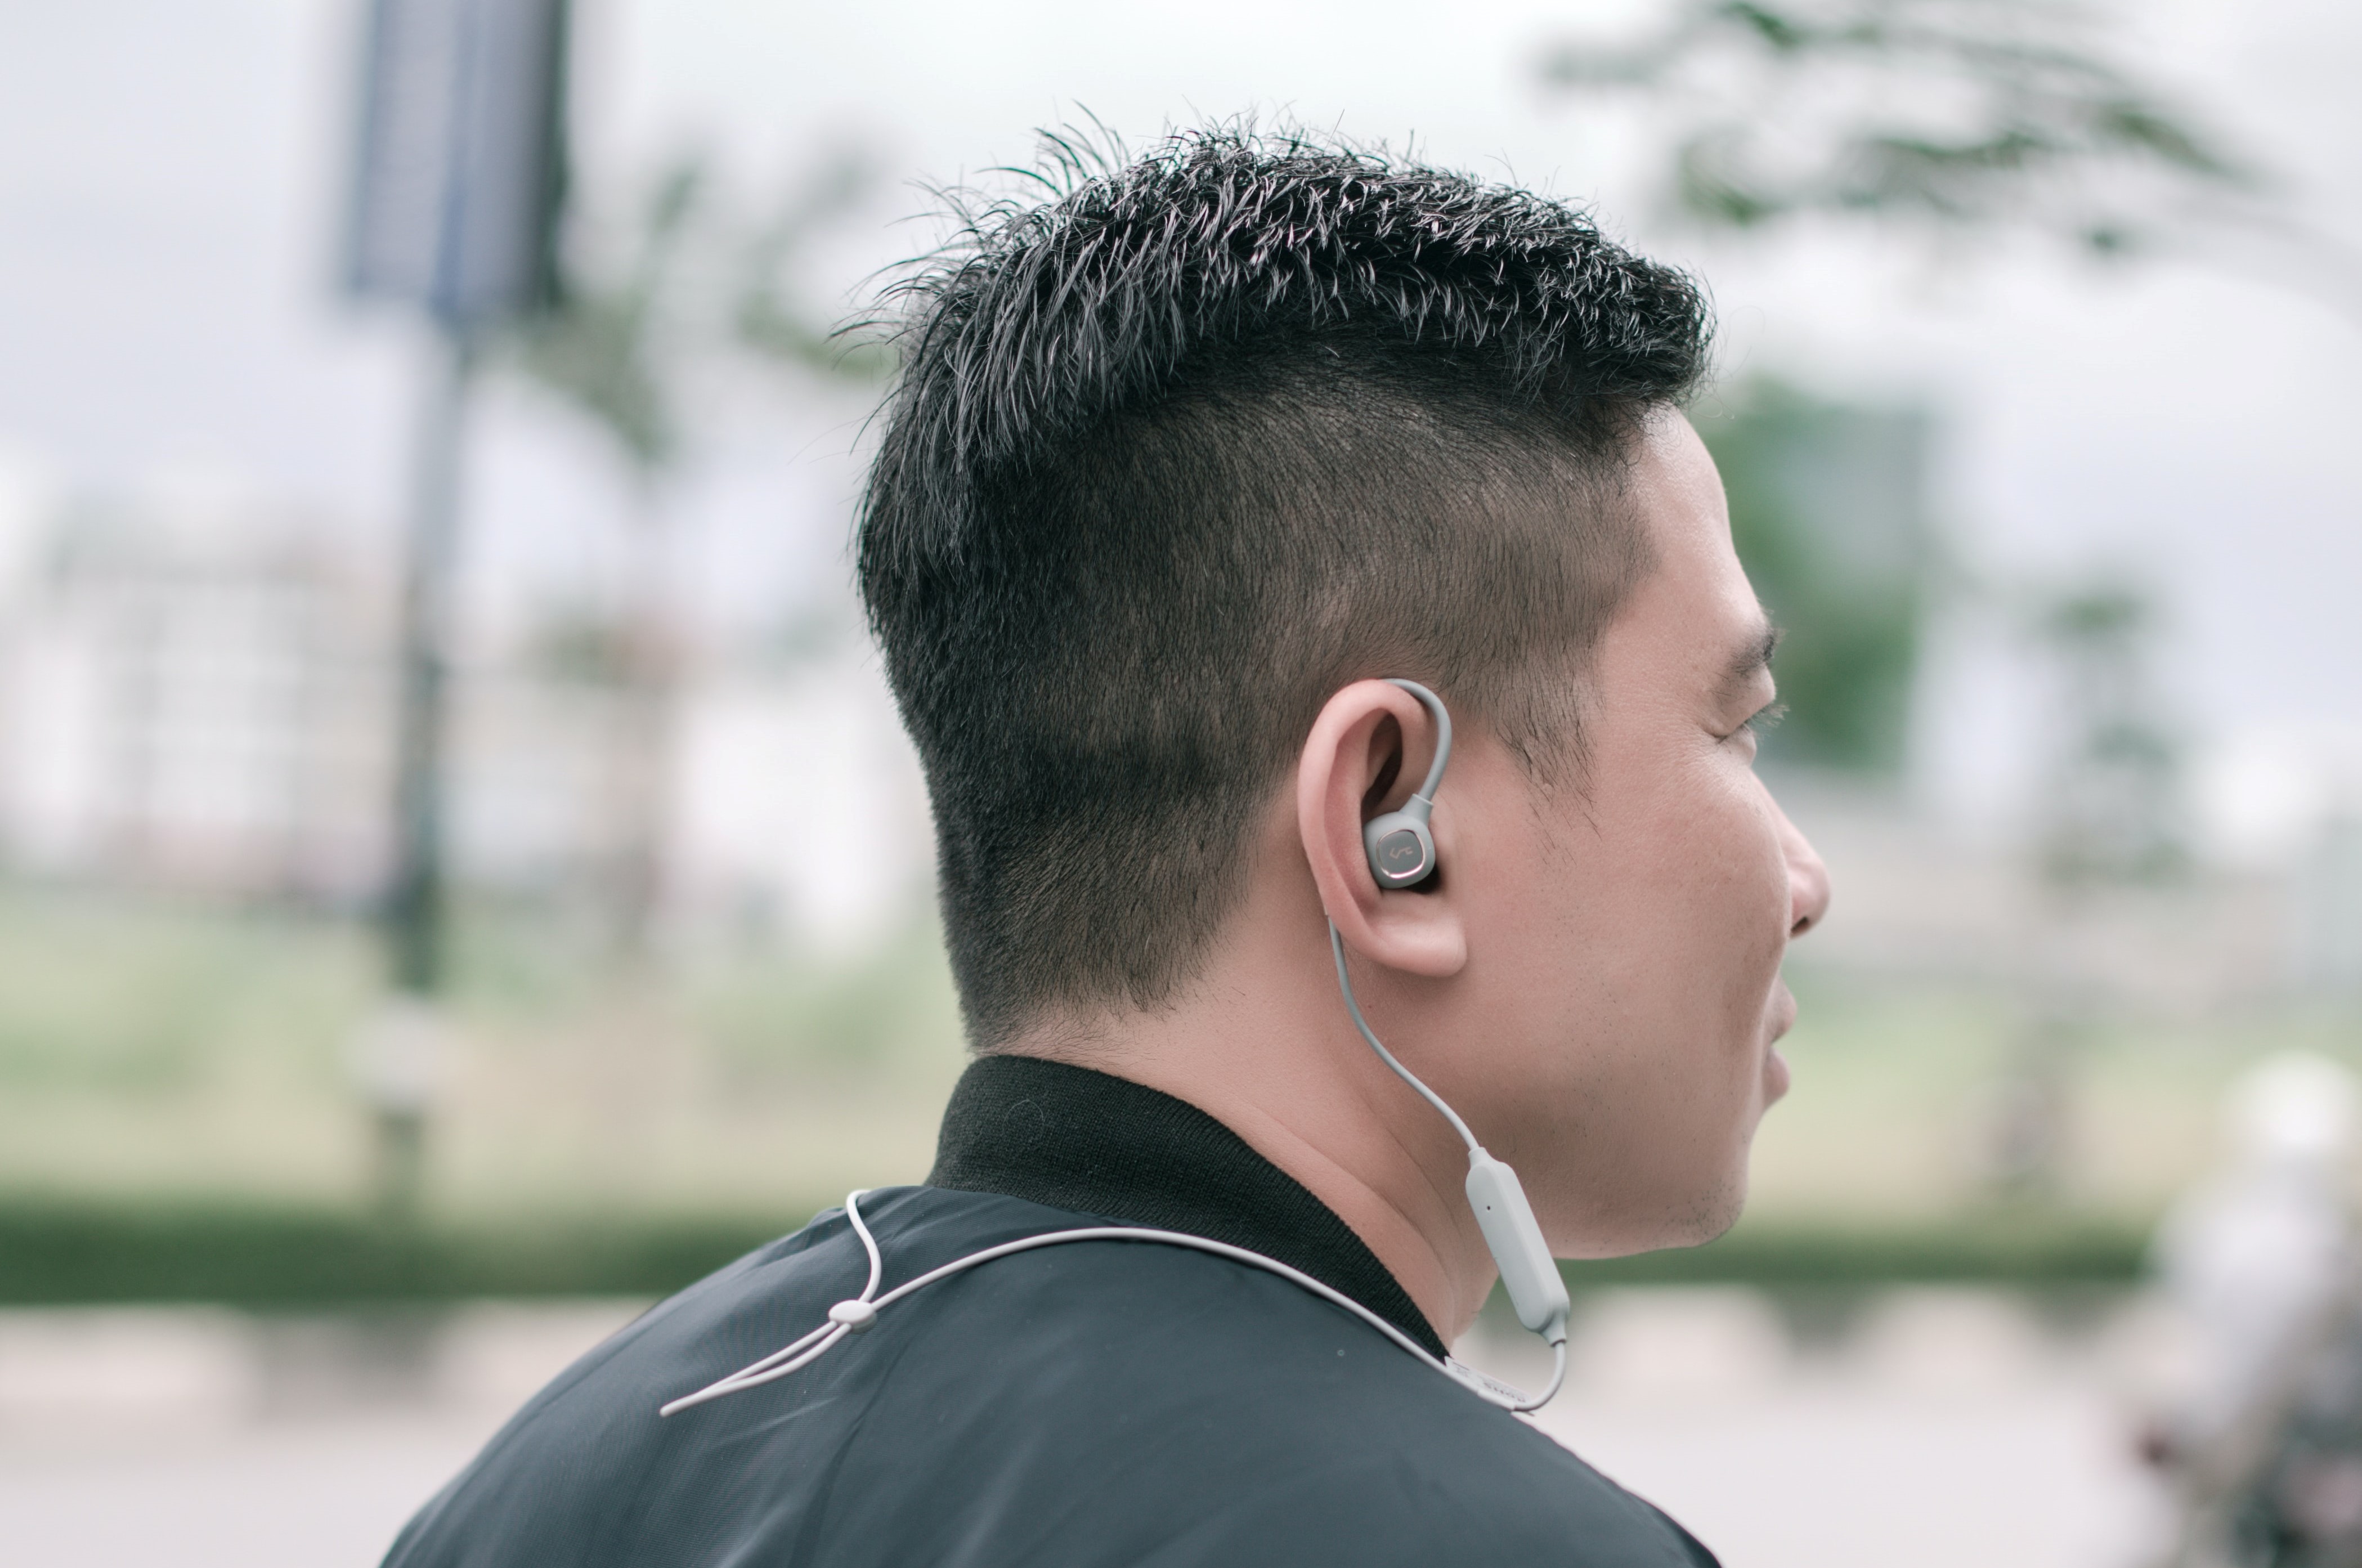 A Southeast Asian man wearing earbuds outdoors